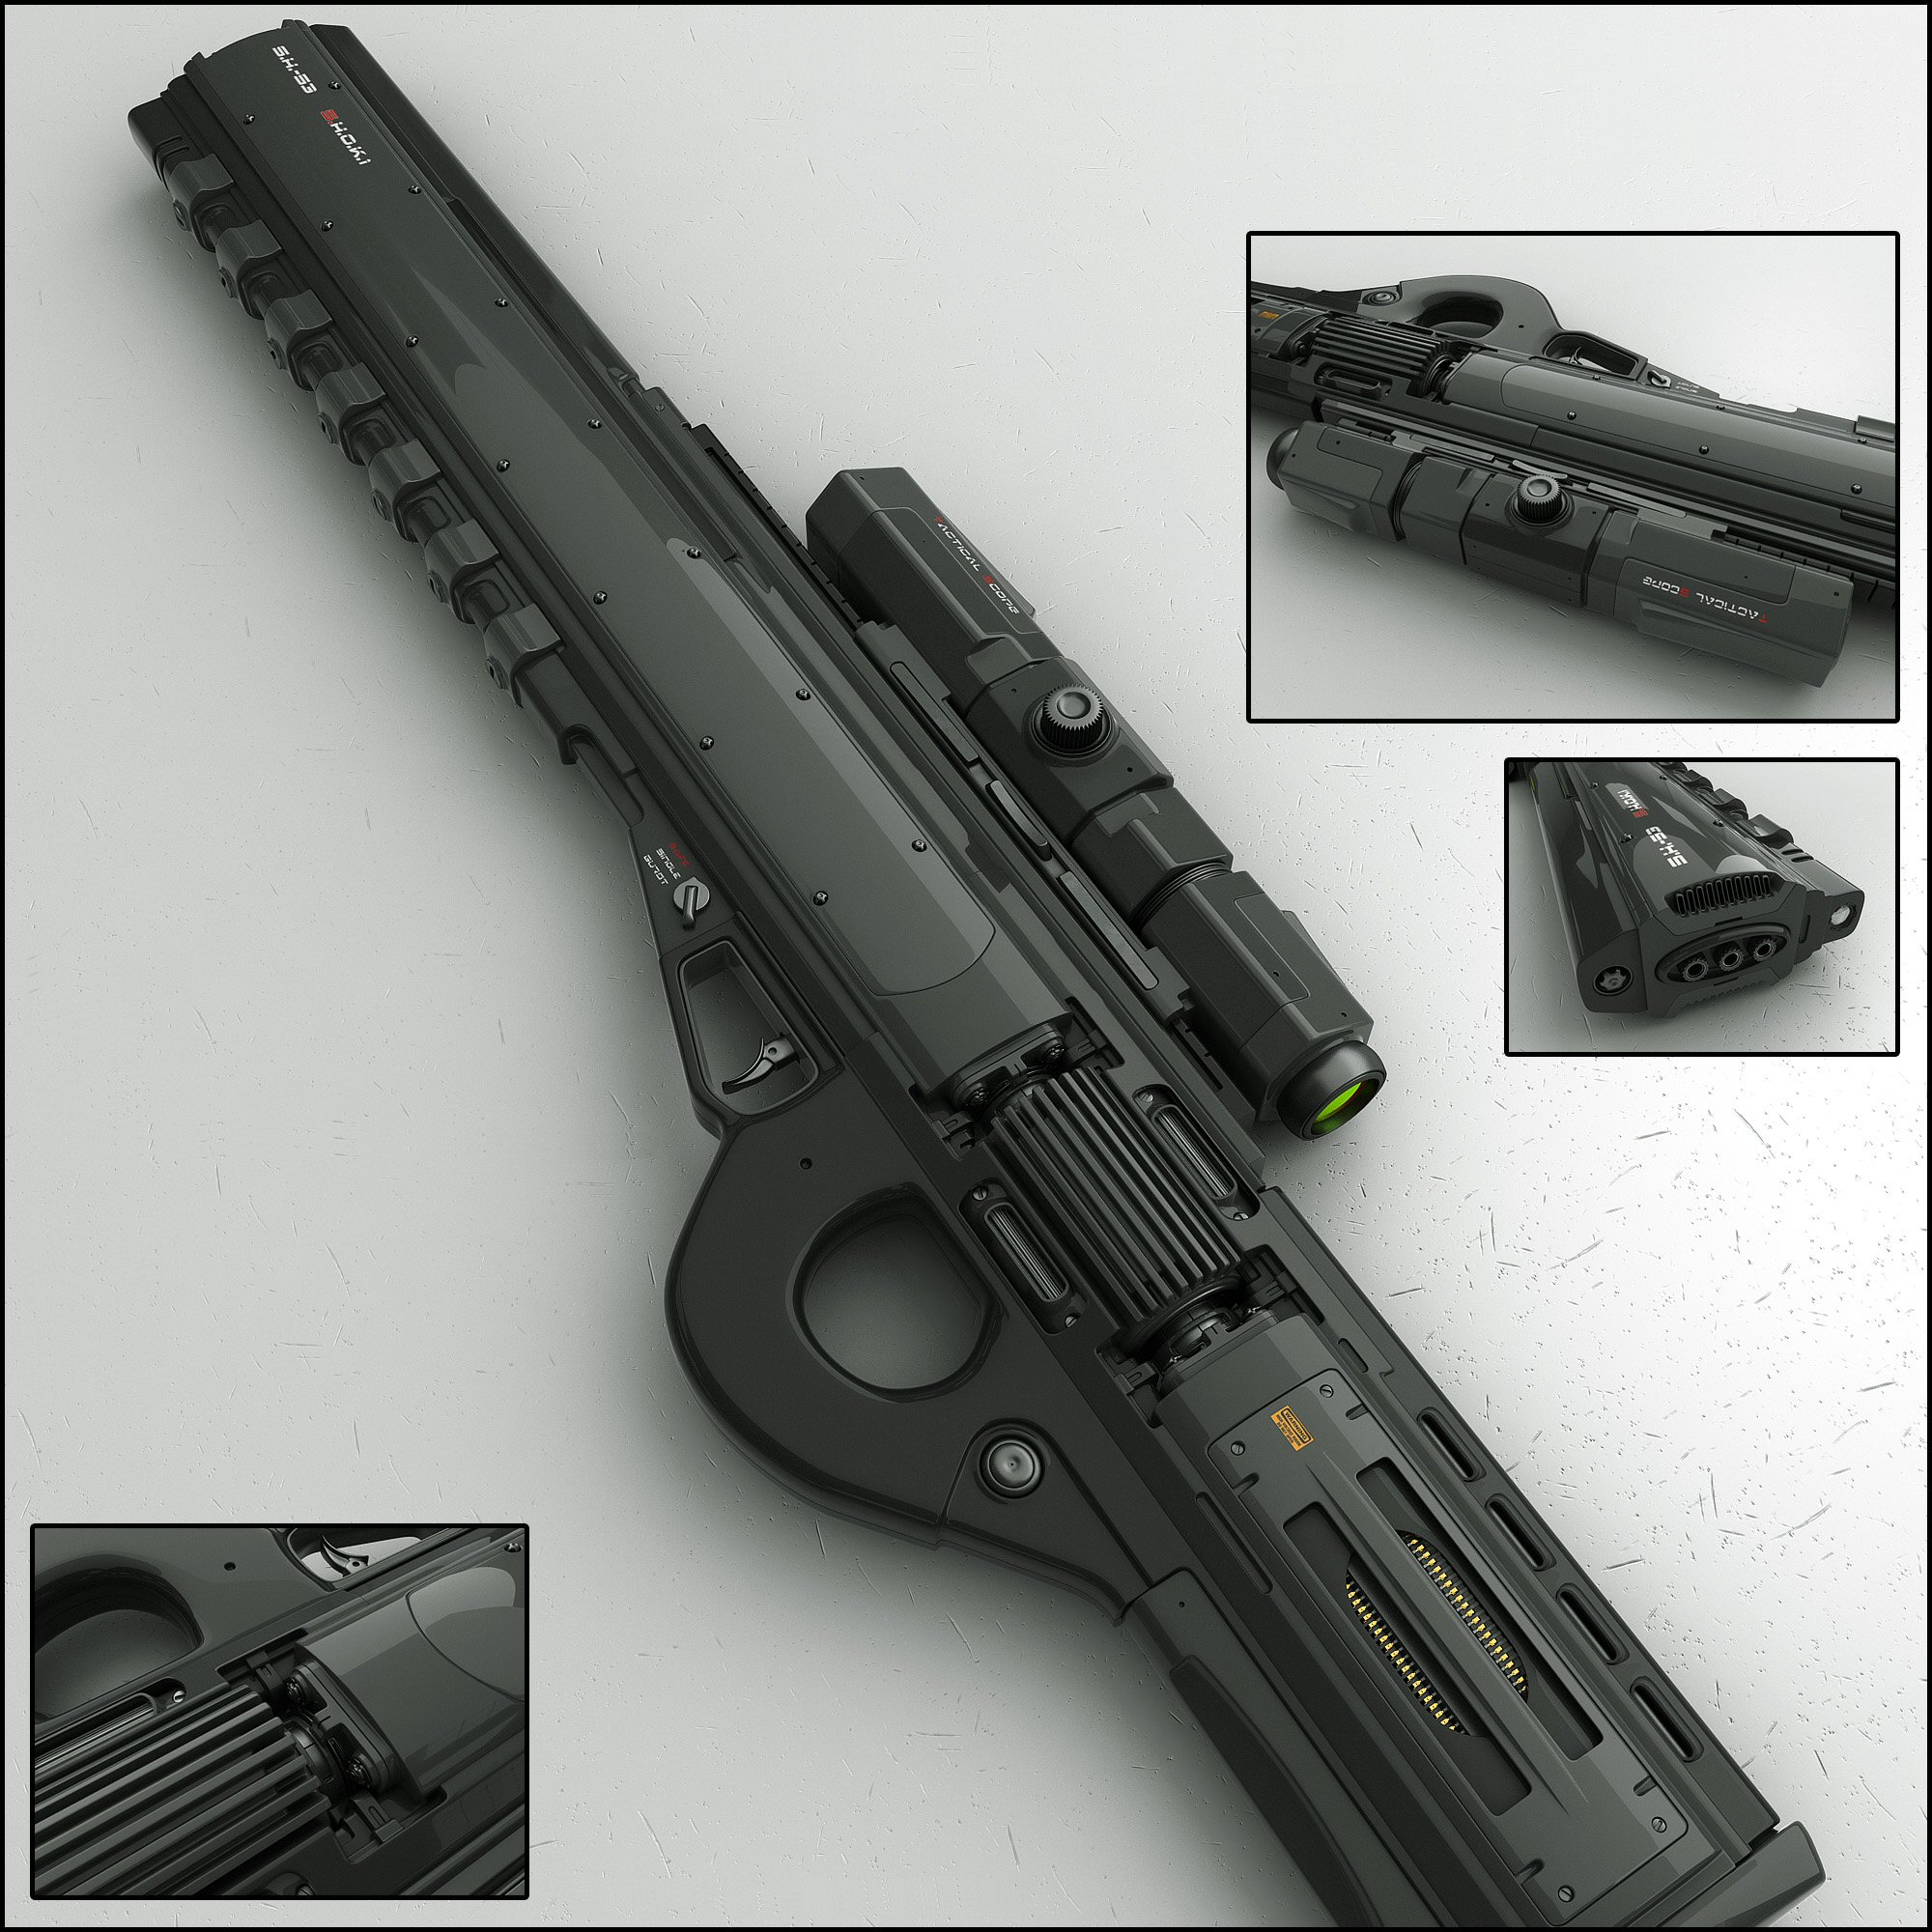 The GX-80 Dalacari Sniper Rifle